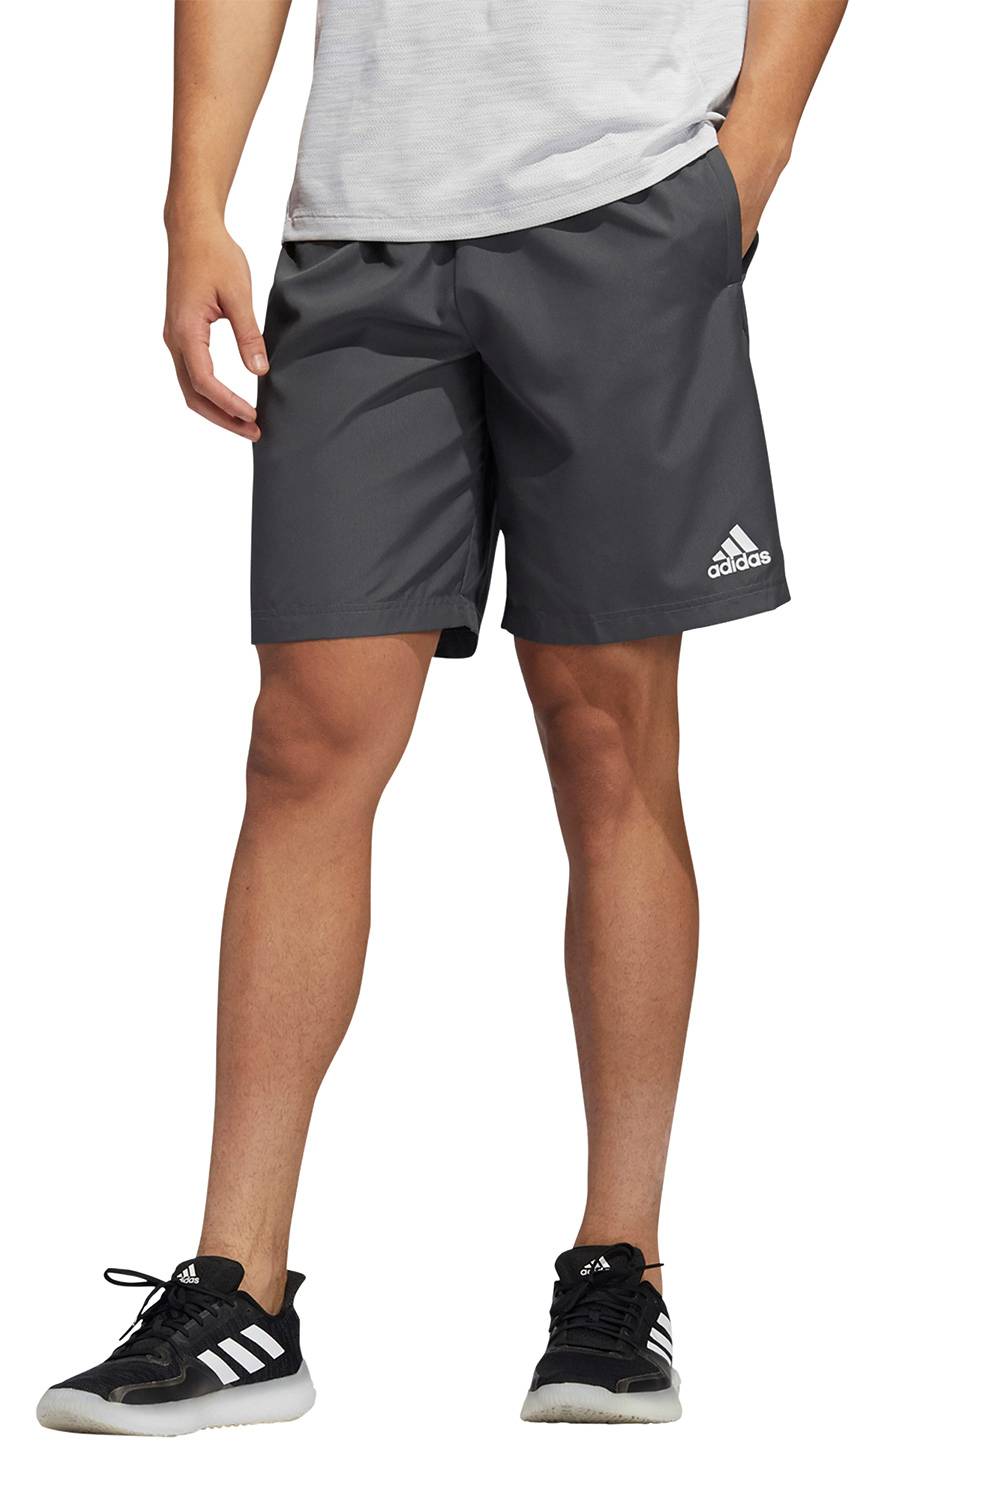 ADIDAS - Short Deportivo Hombre Adidas